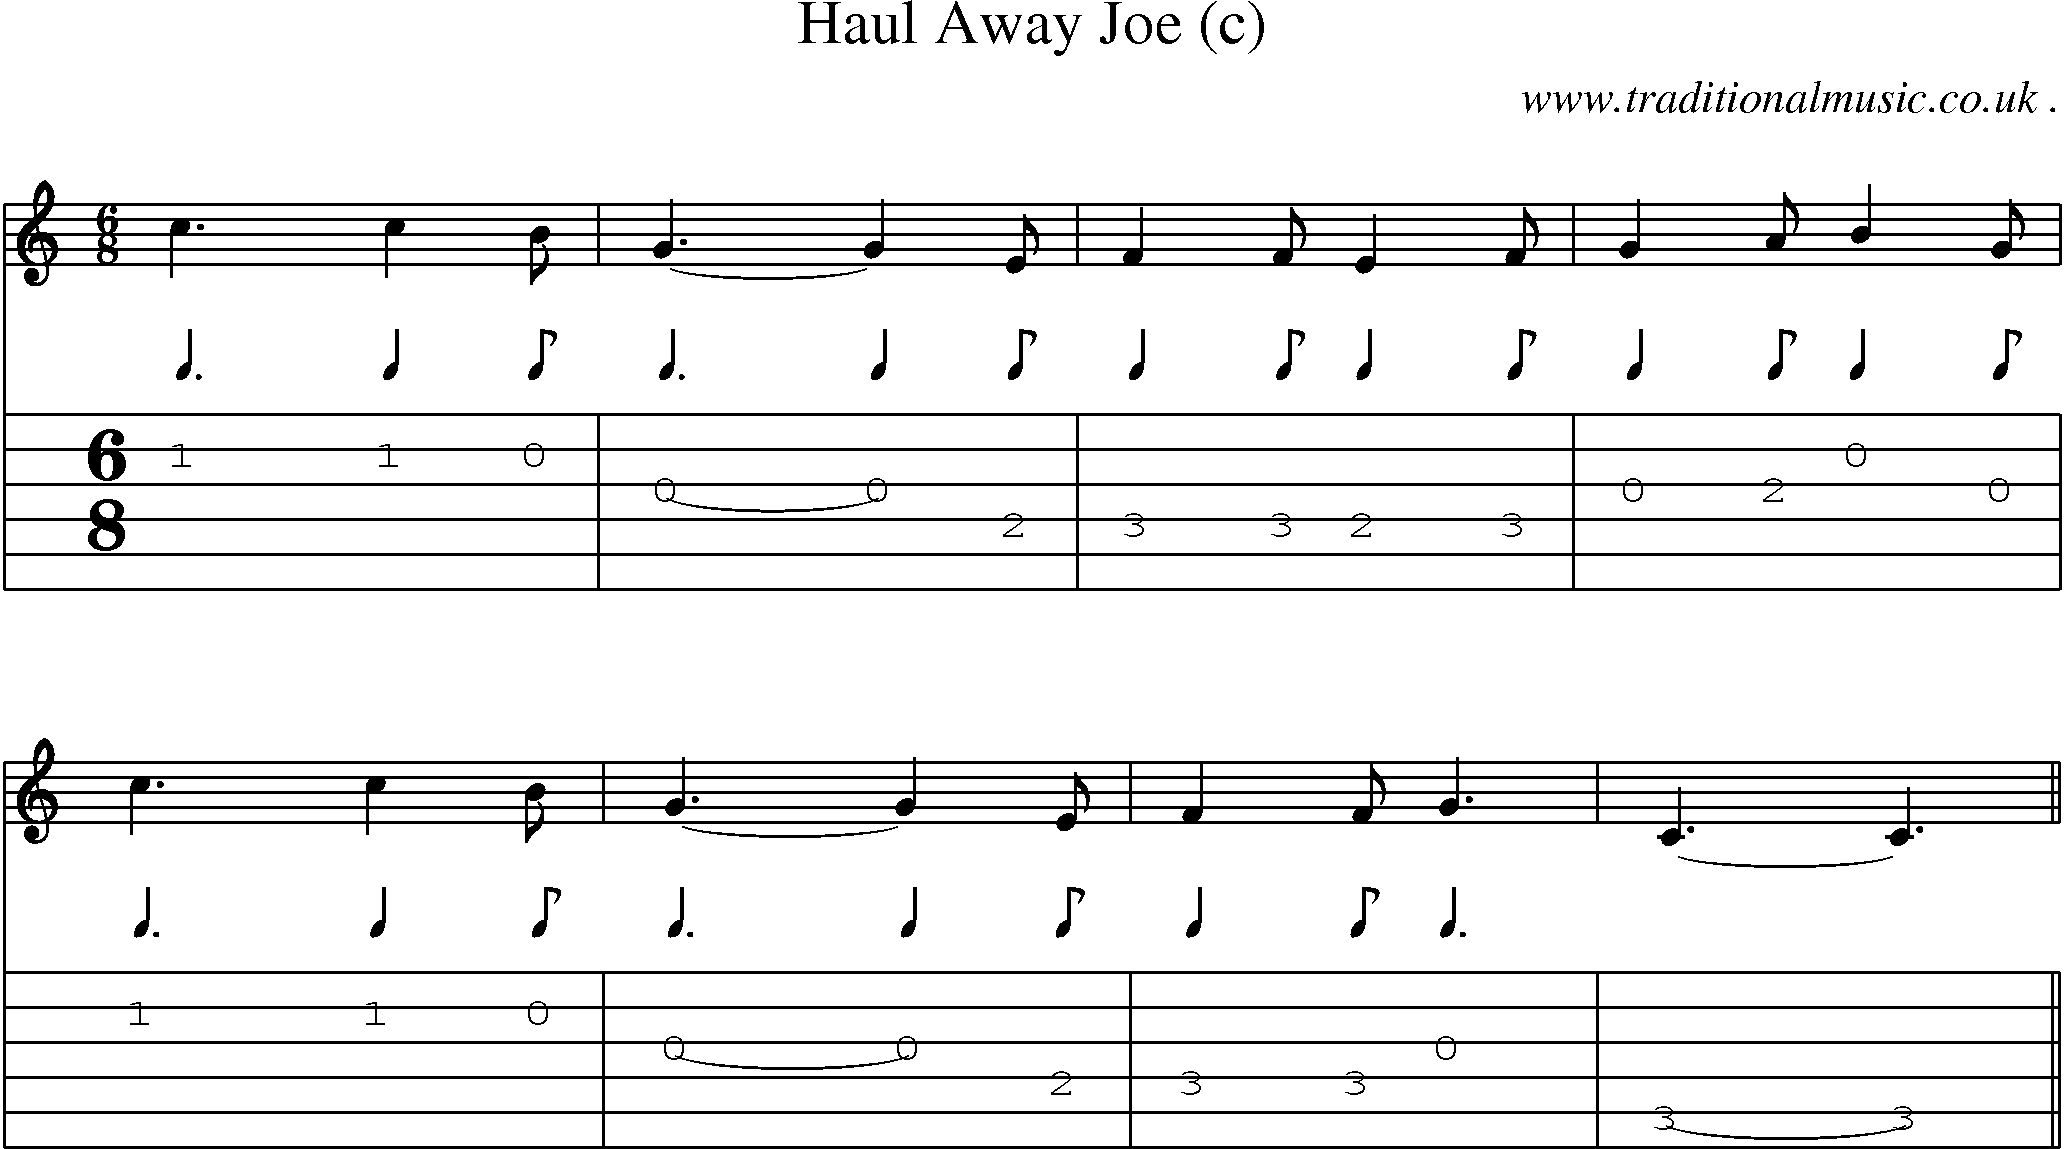 Sheet-Music and Guitar Tabs for Haul Away Joe (c)